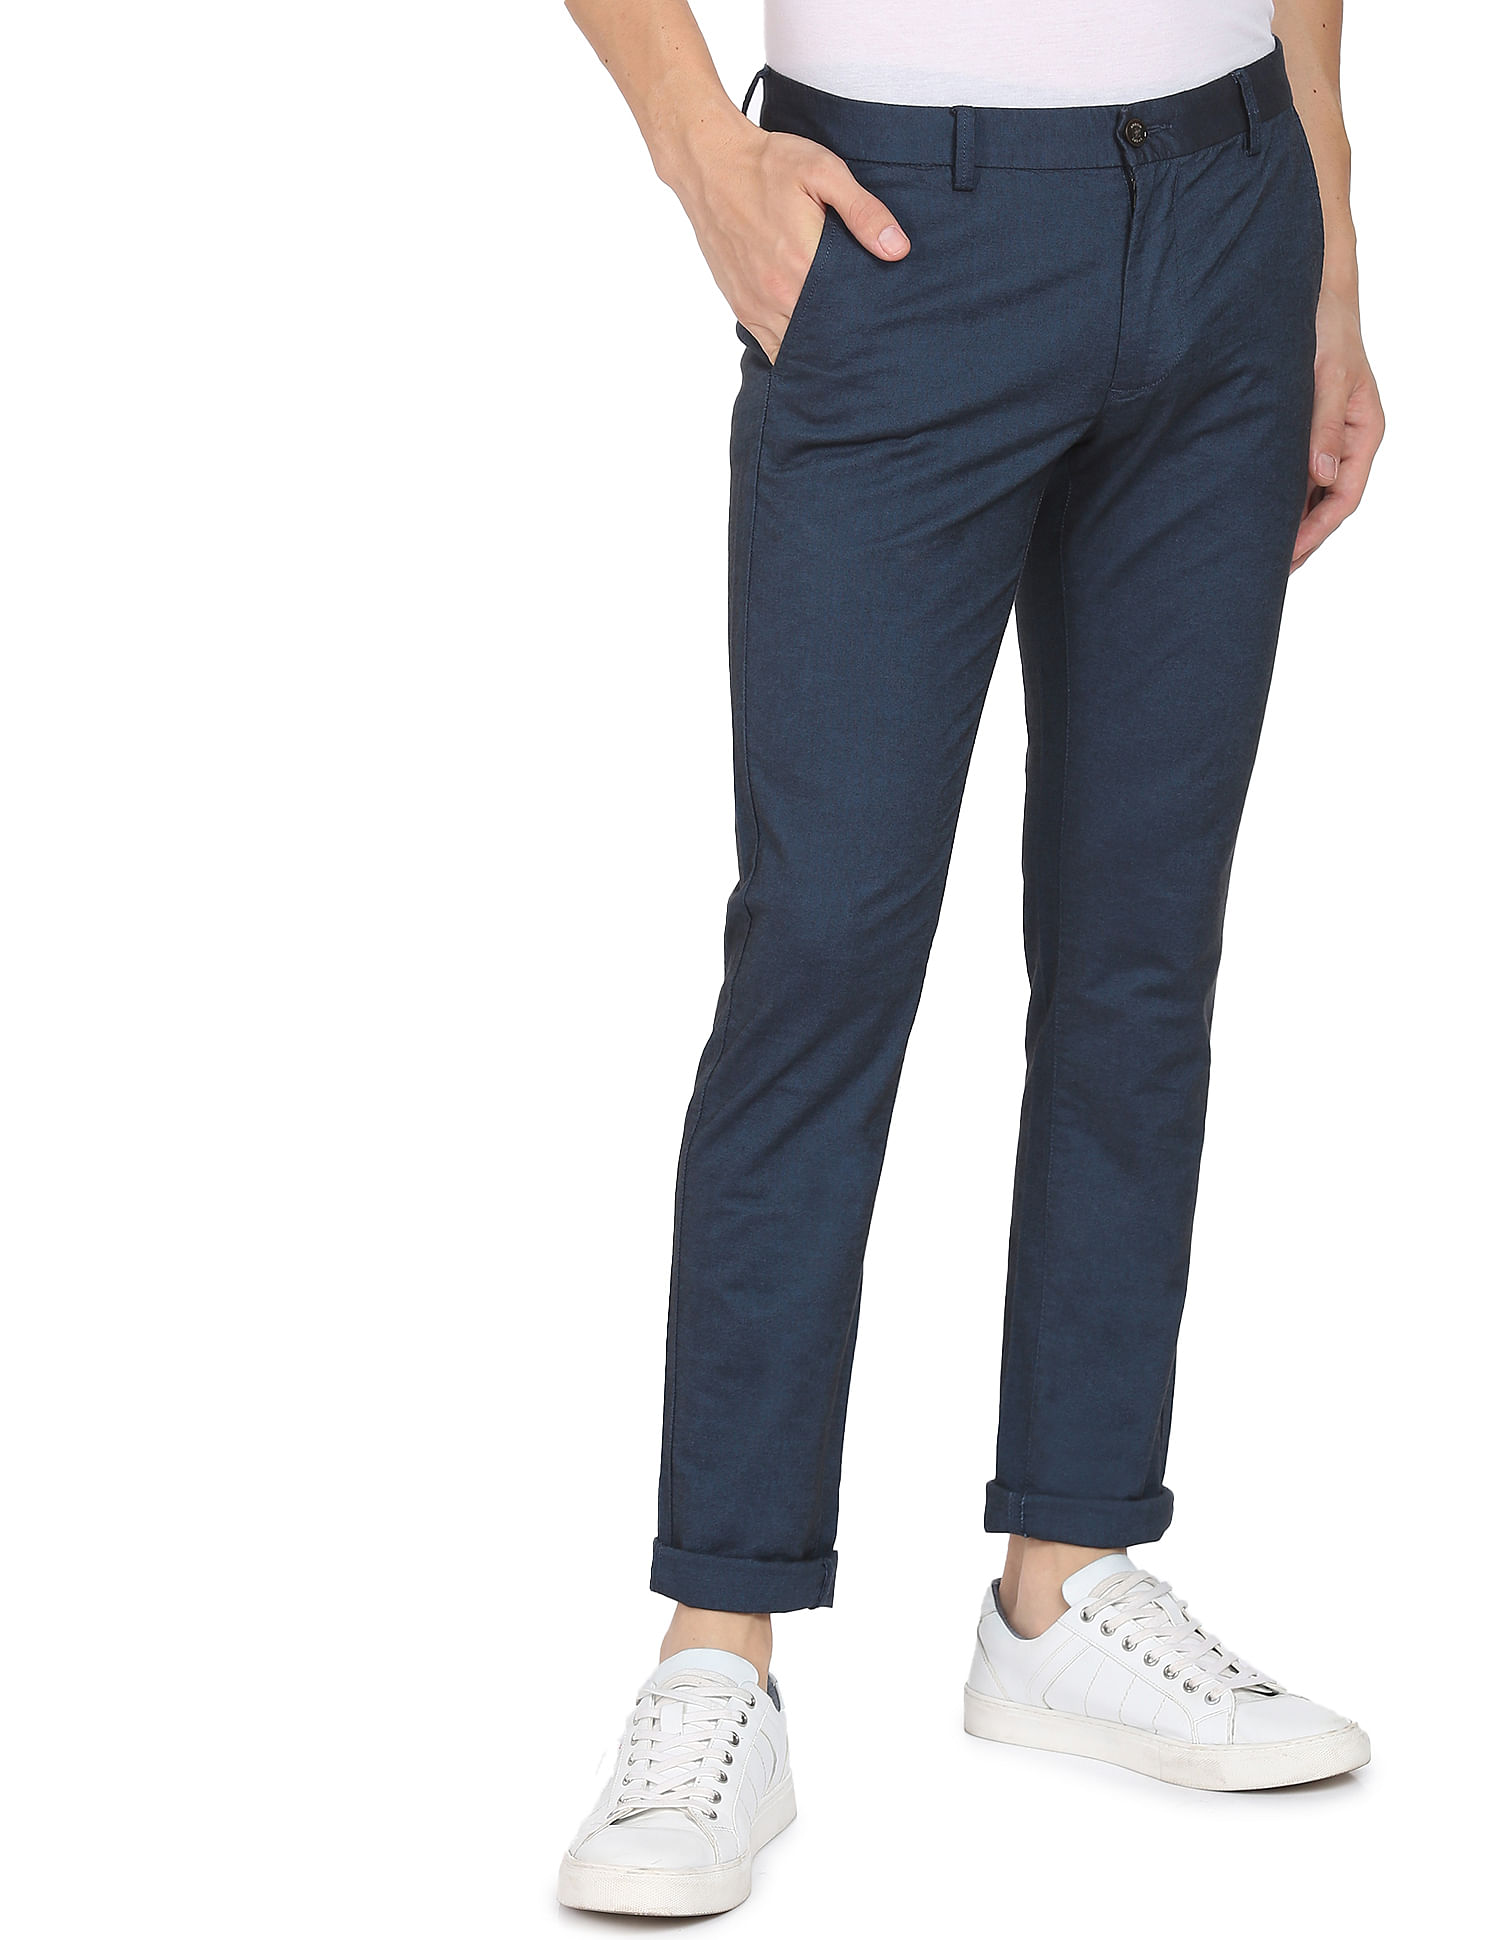 Buy Cargo Regular Fit Mens Trousers Pack of 1 Colour Dark Blue Full Length  Size 34 at Amazonin